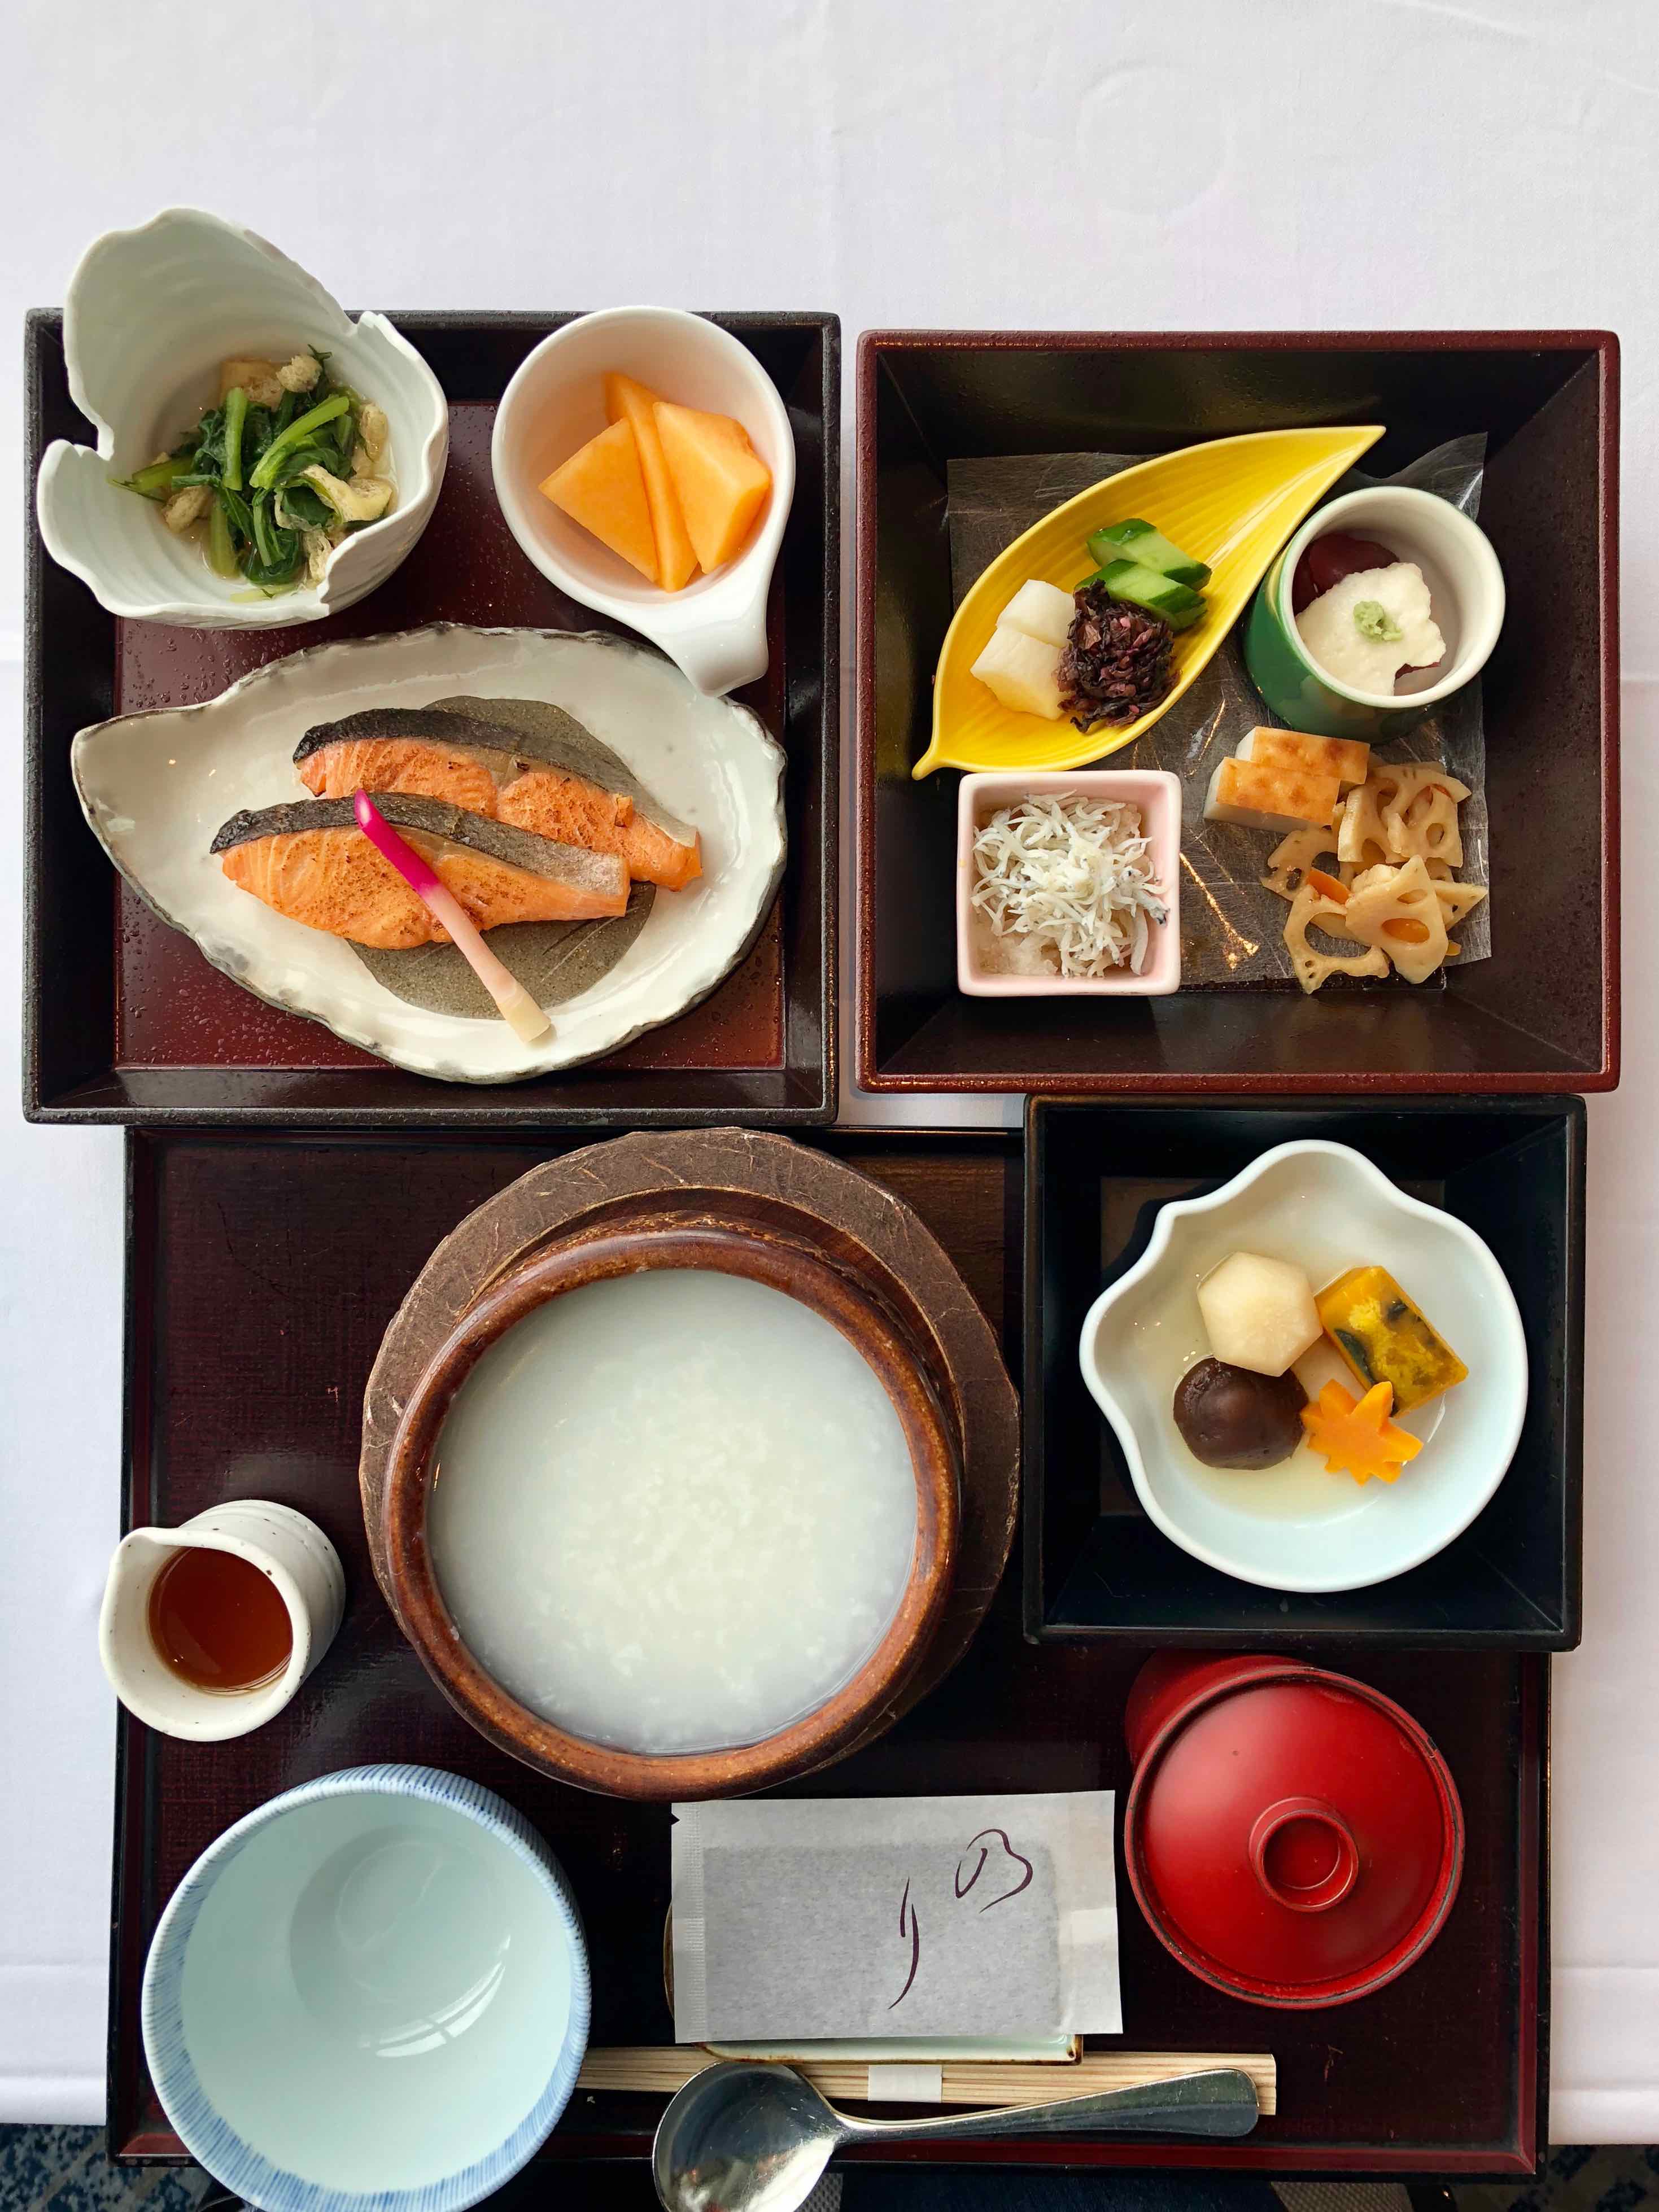 The Ritz Carlton Tokyo food